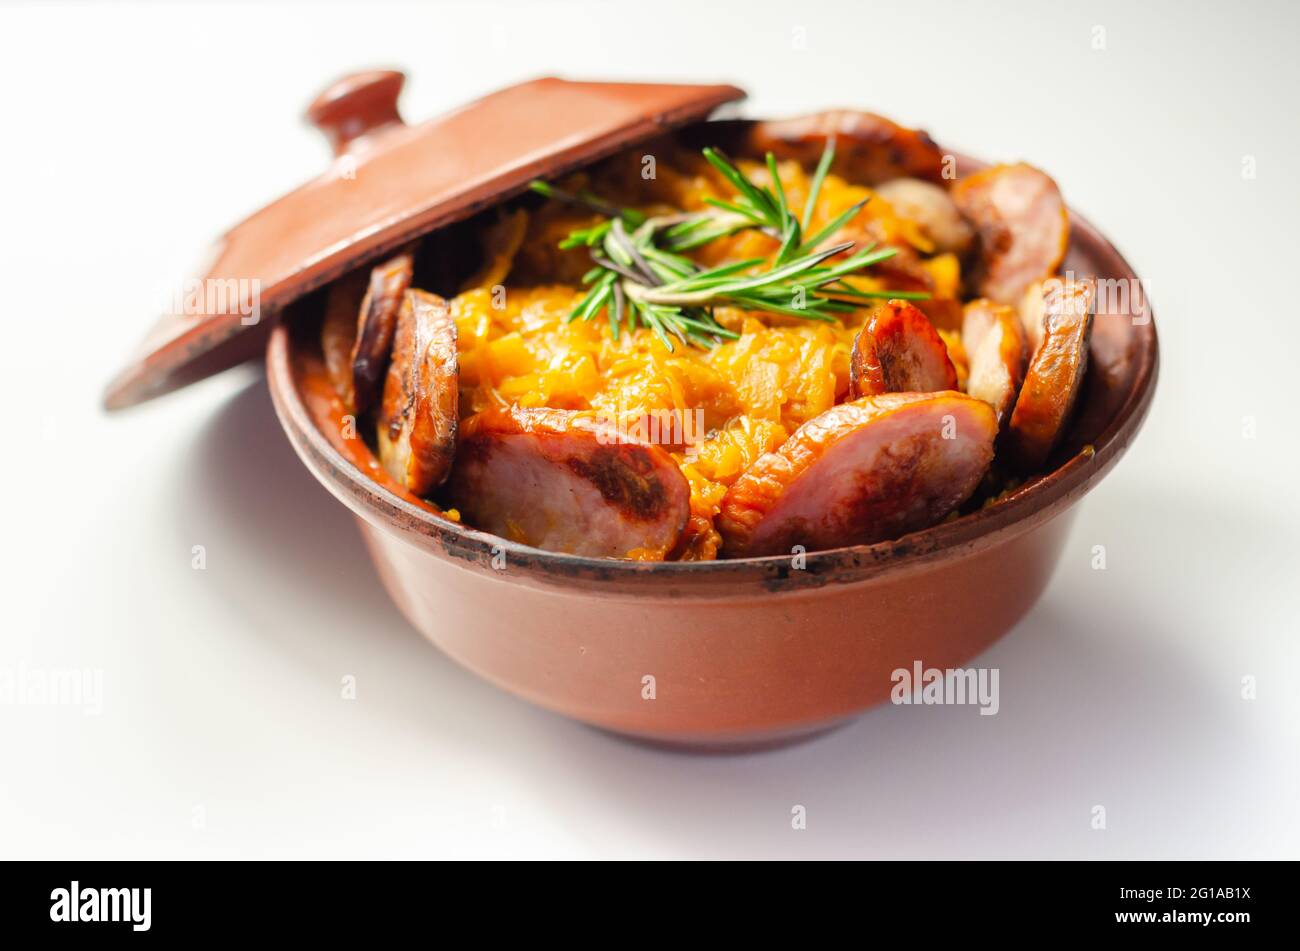 Traditional Polish dish called bigos made of sauerkraut, sausage and mushrooms, food served warm in a ceramic bowl, Eastern European food Stock Photo